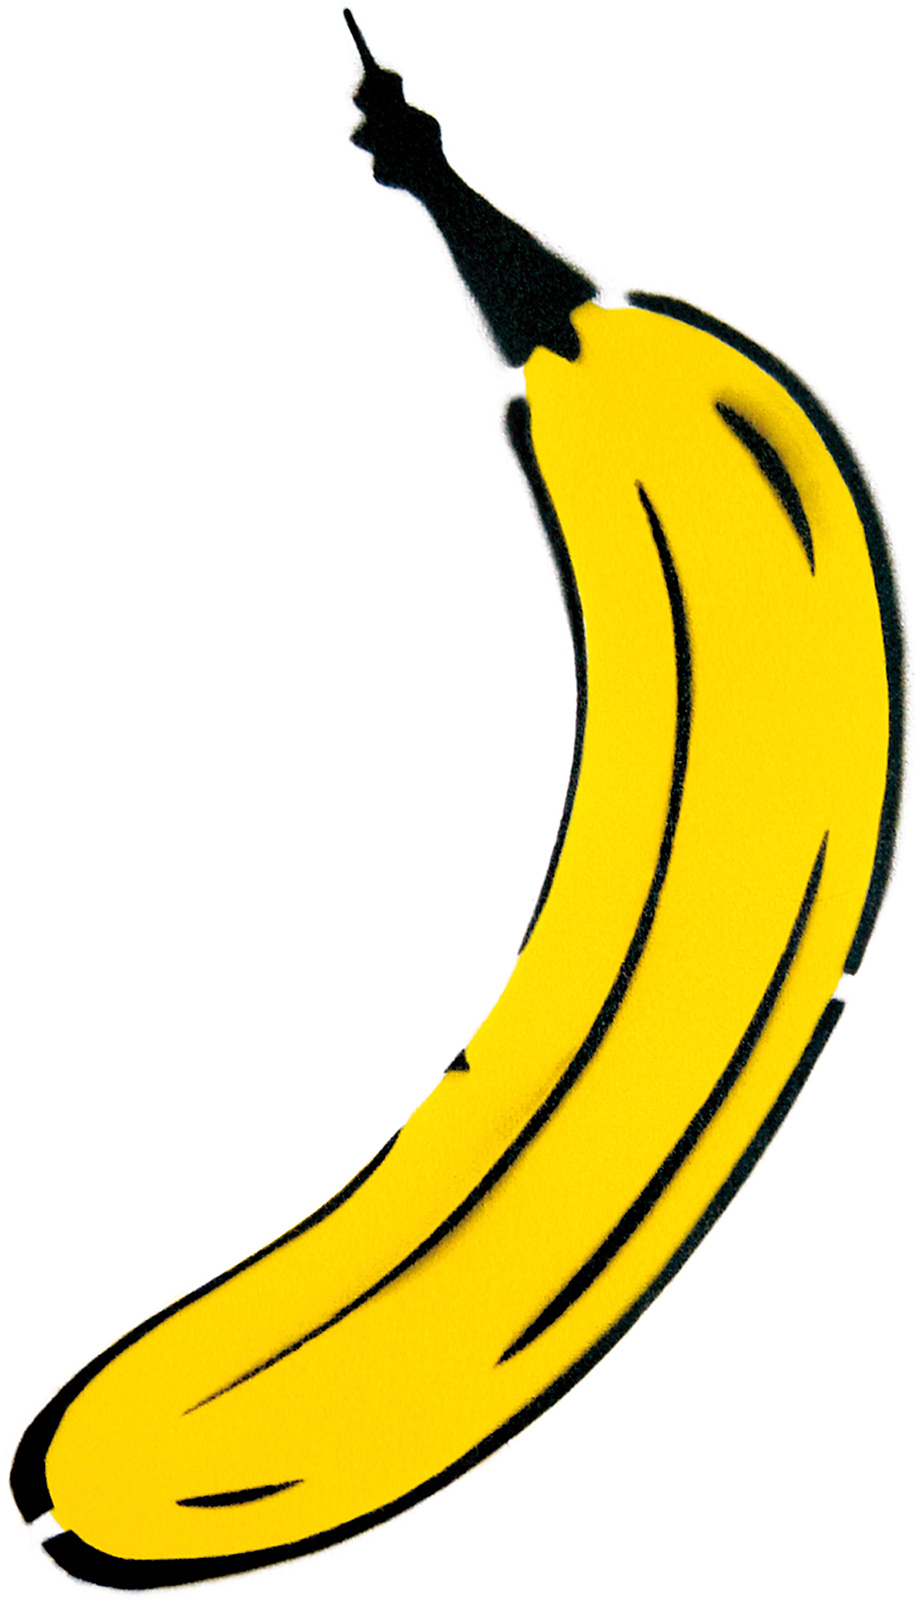 Thomas Baumgärtel: Wandobjekt 'Cut Out Banane'